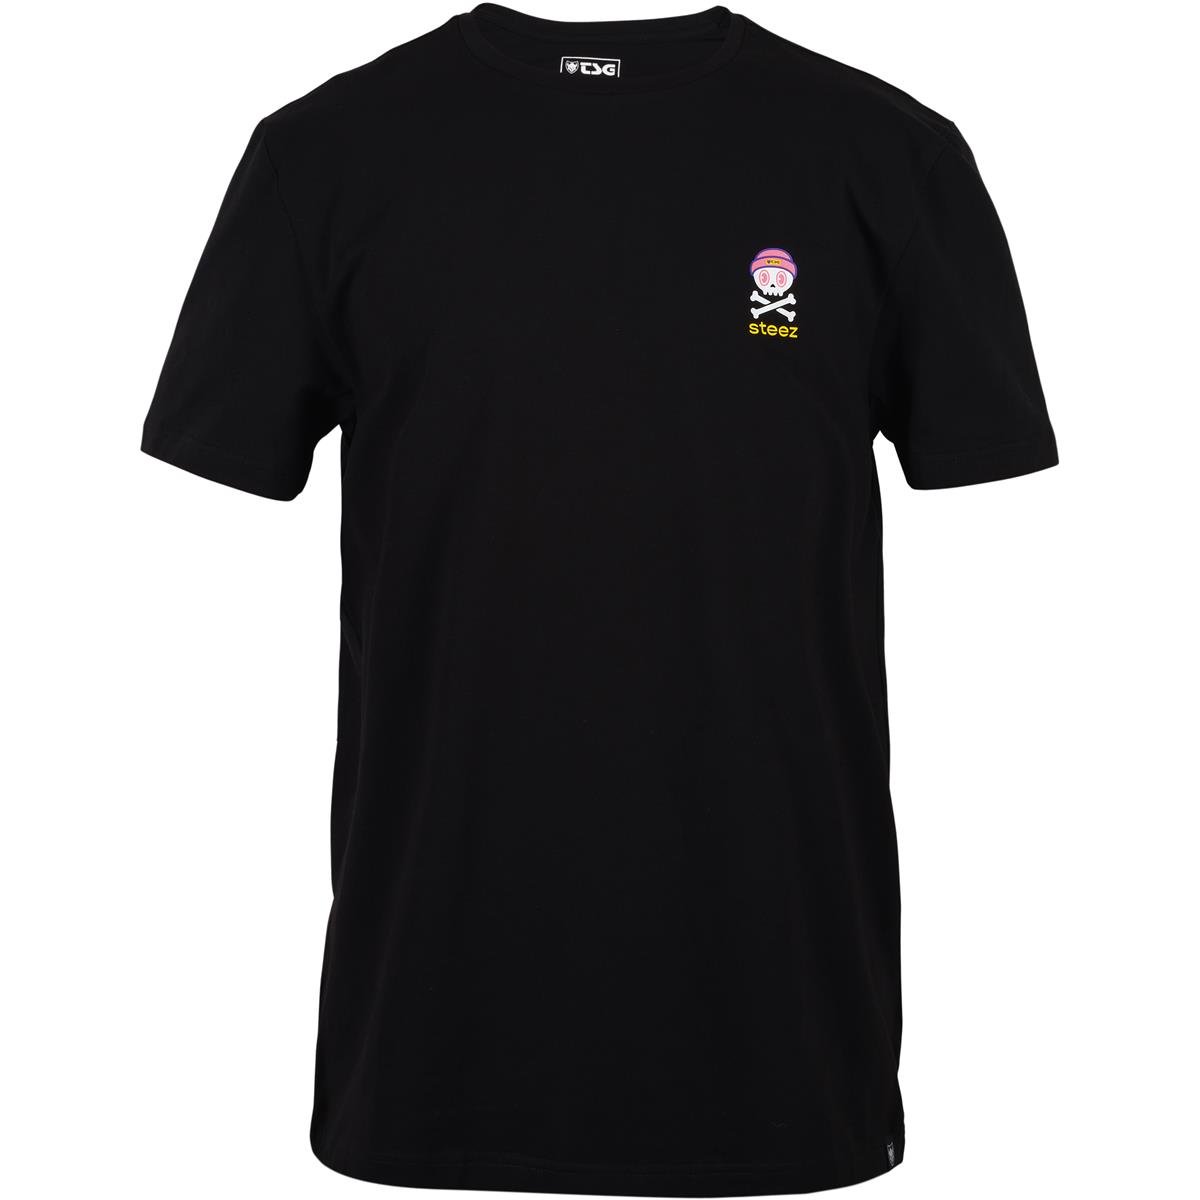 TSG T-Shirt Steezy Black